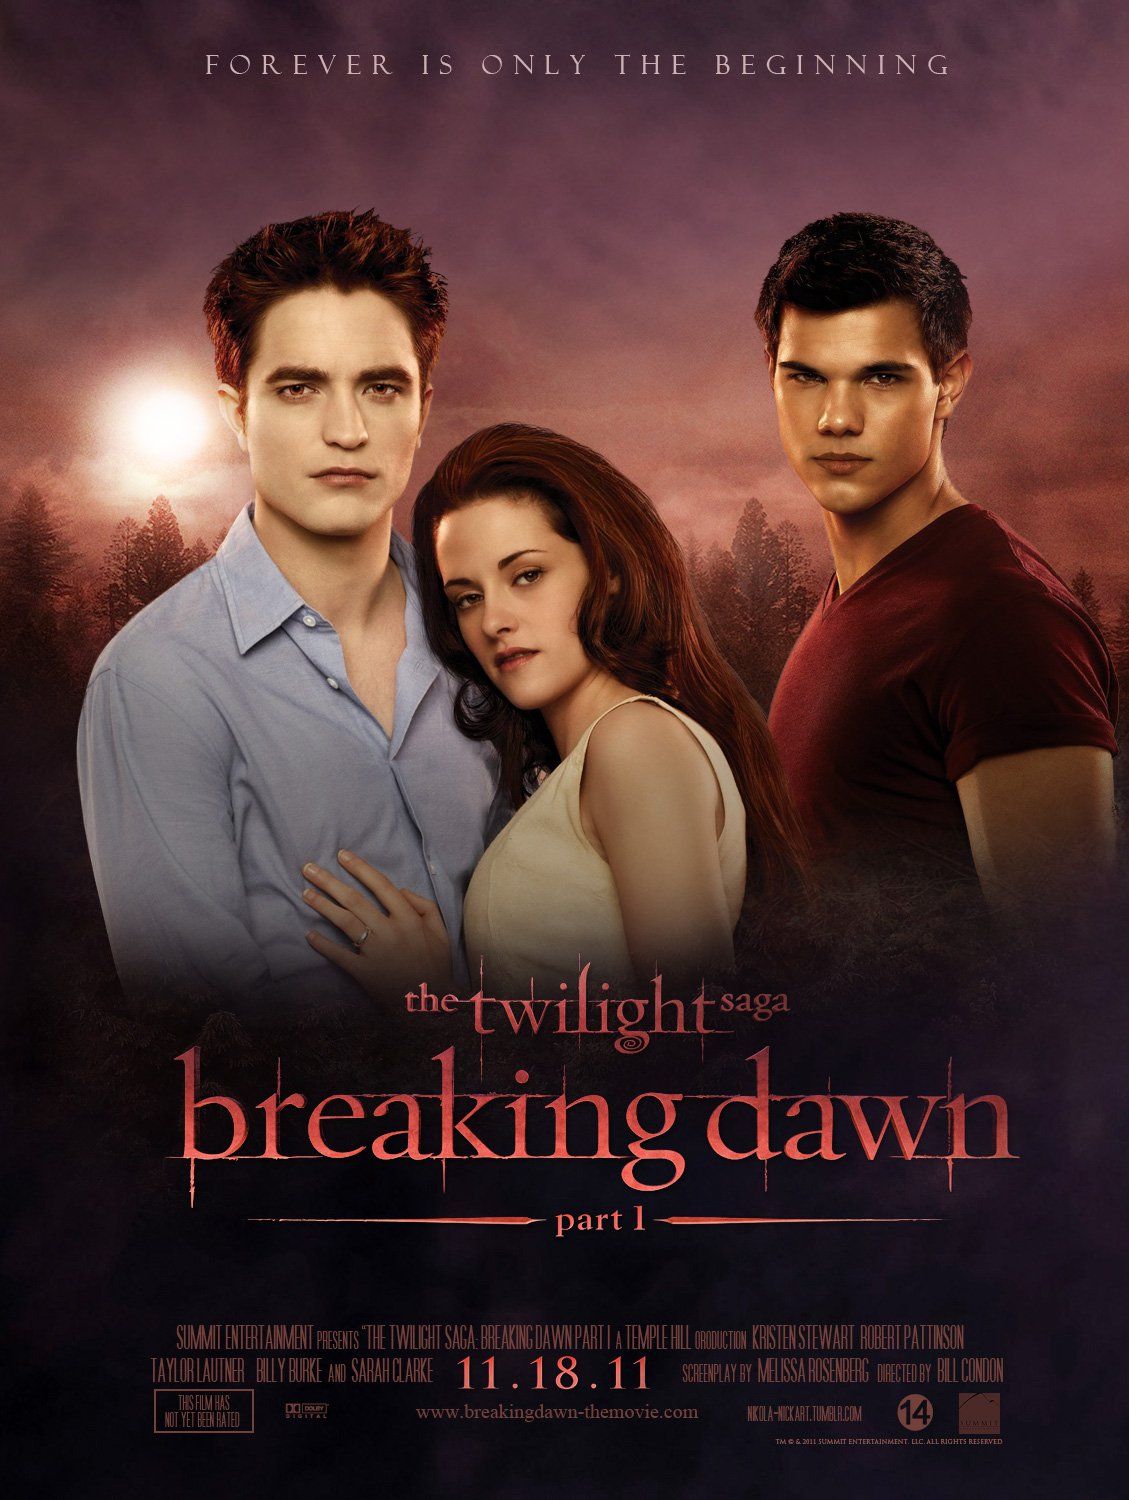 The twilight saga breaking dawn part 2 in hindi mobile movies free download